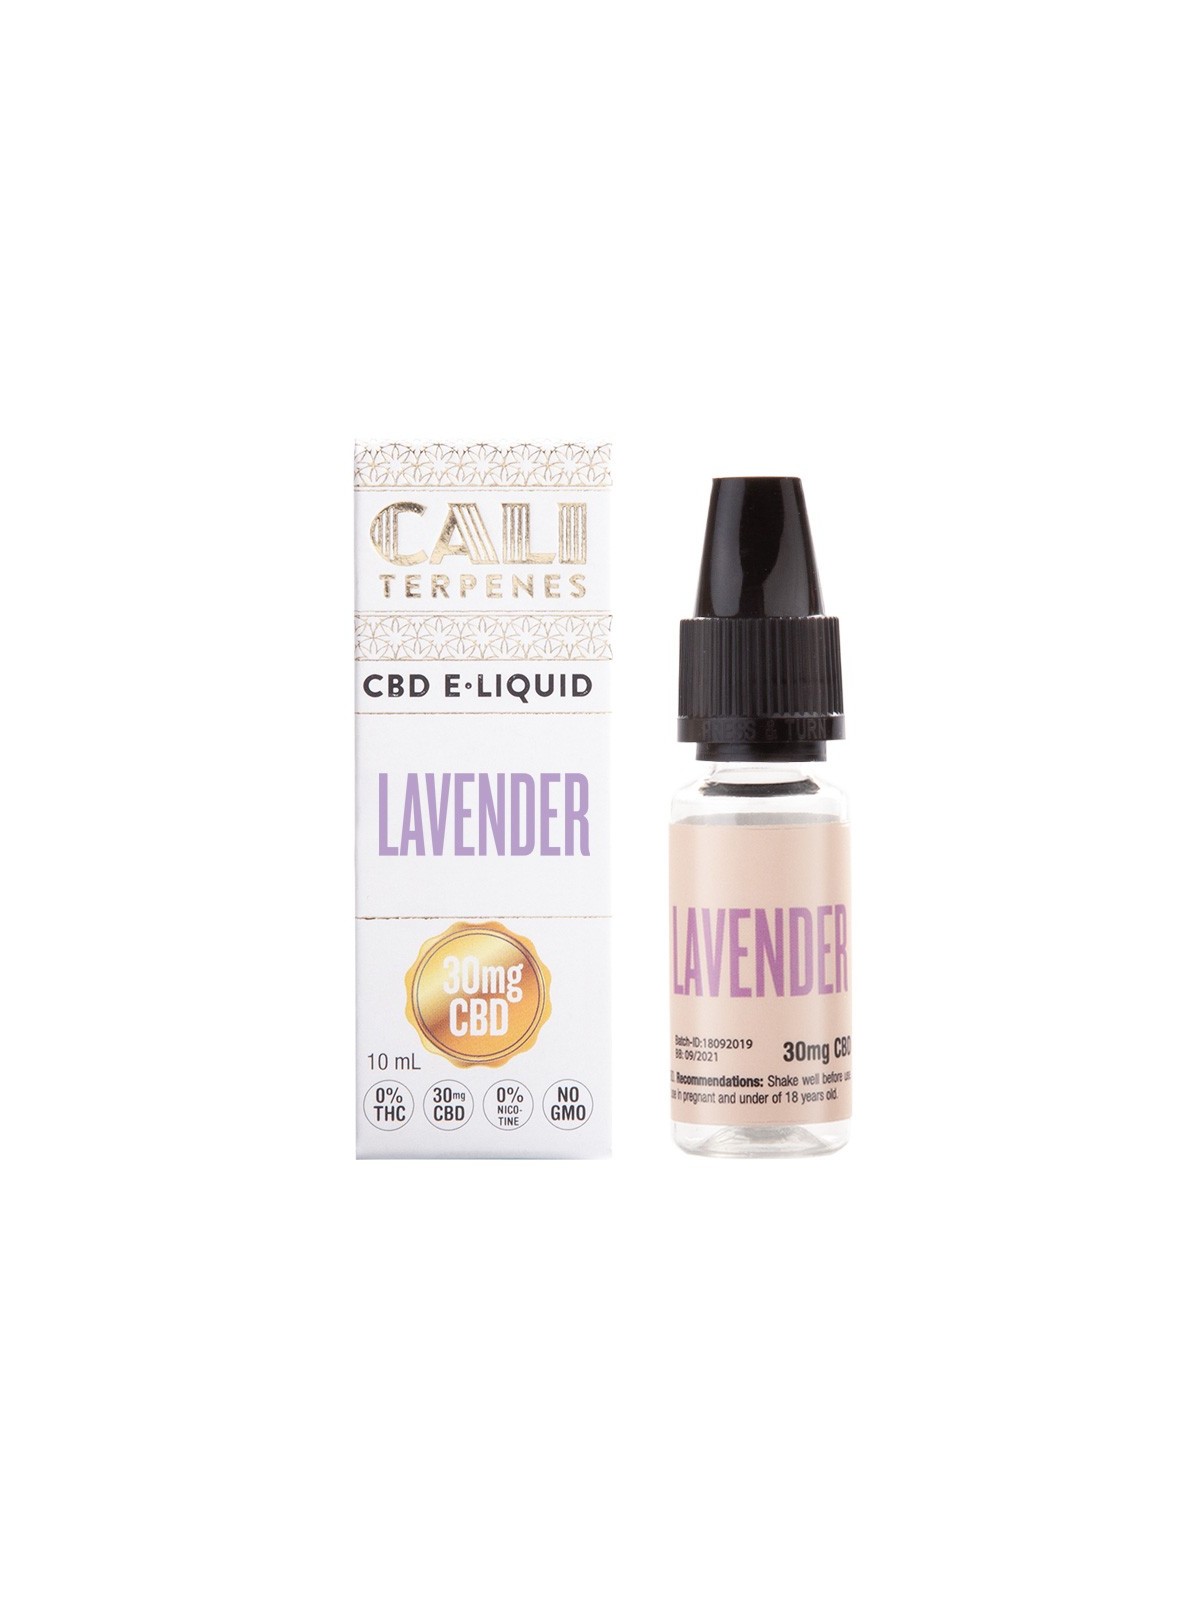 E-liquid CBD Lavender - 30mg - Cali Terpenes